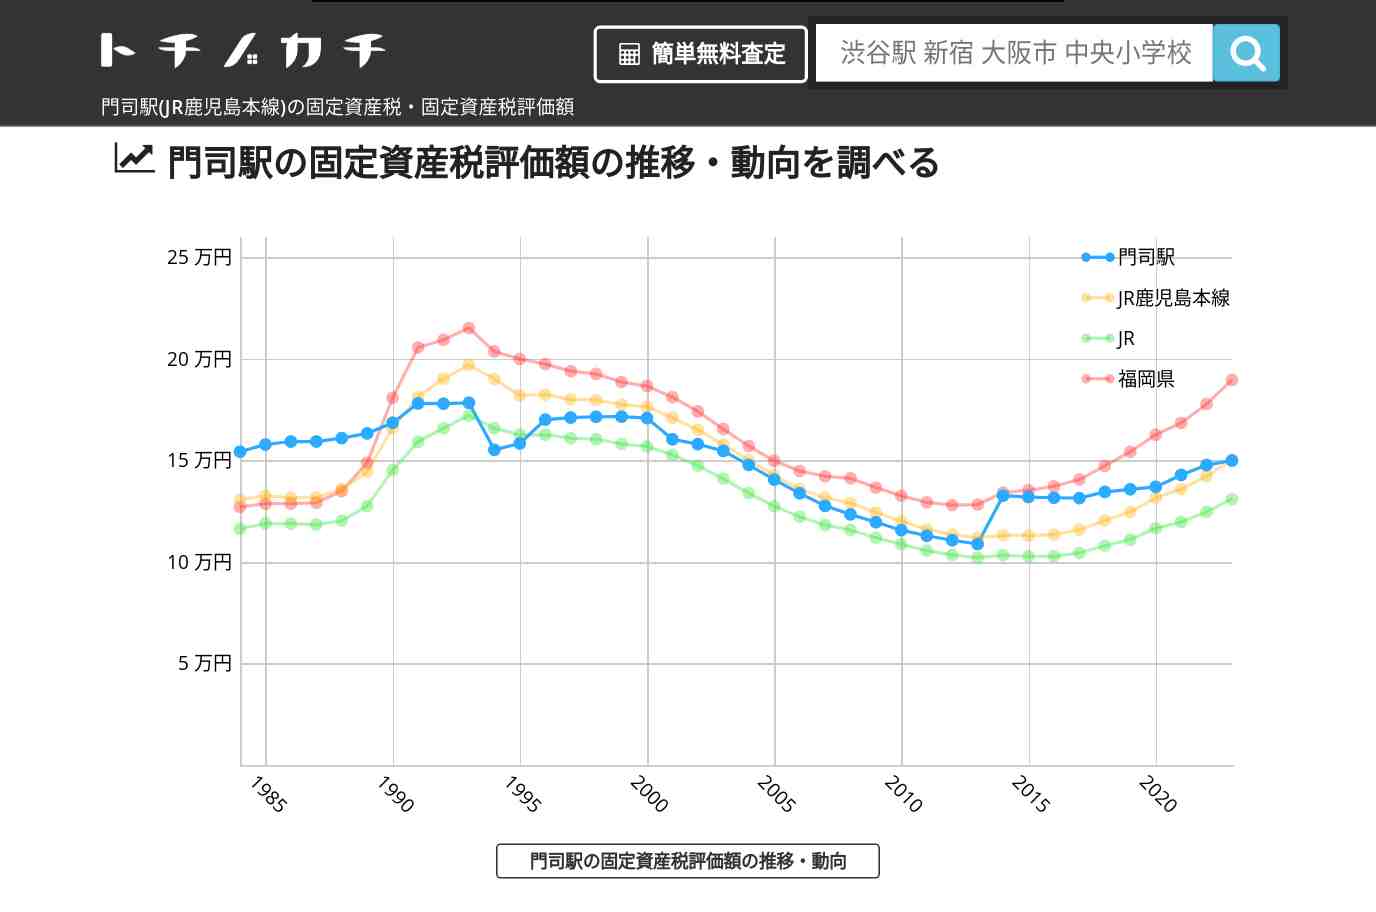 門司駅(JR鹿児島本線)の固定資産税・固定資産税評価額 | トチノカチ